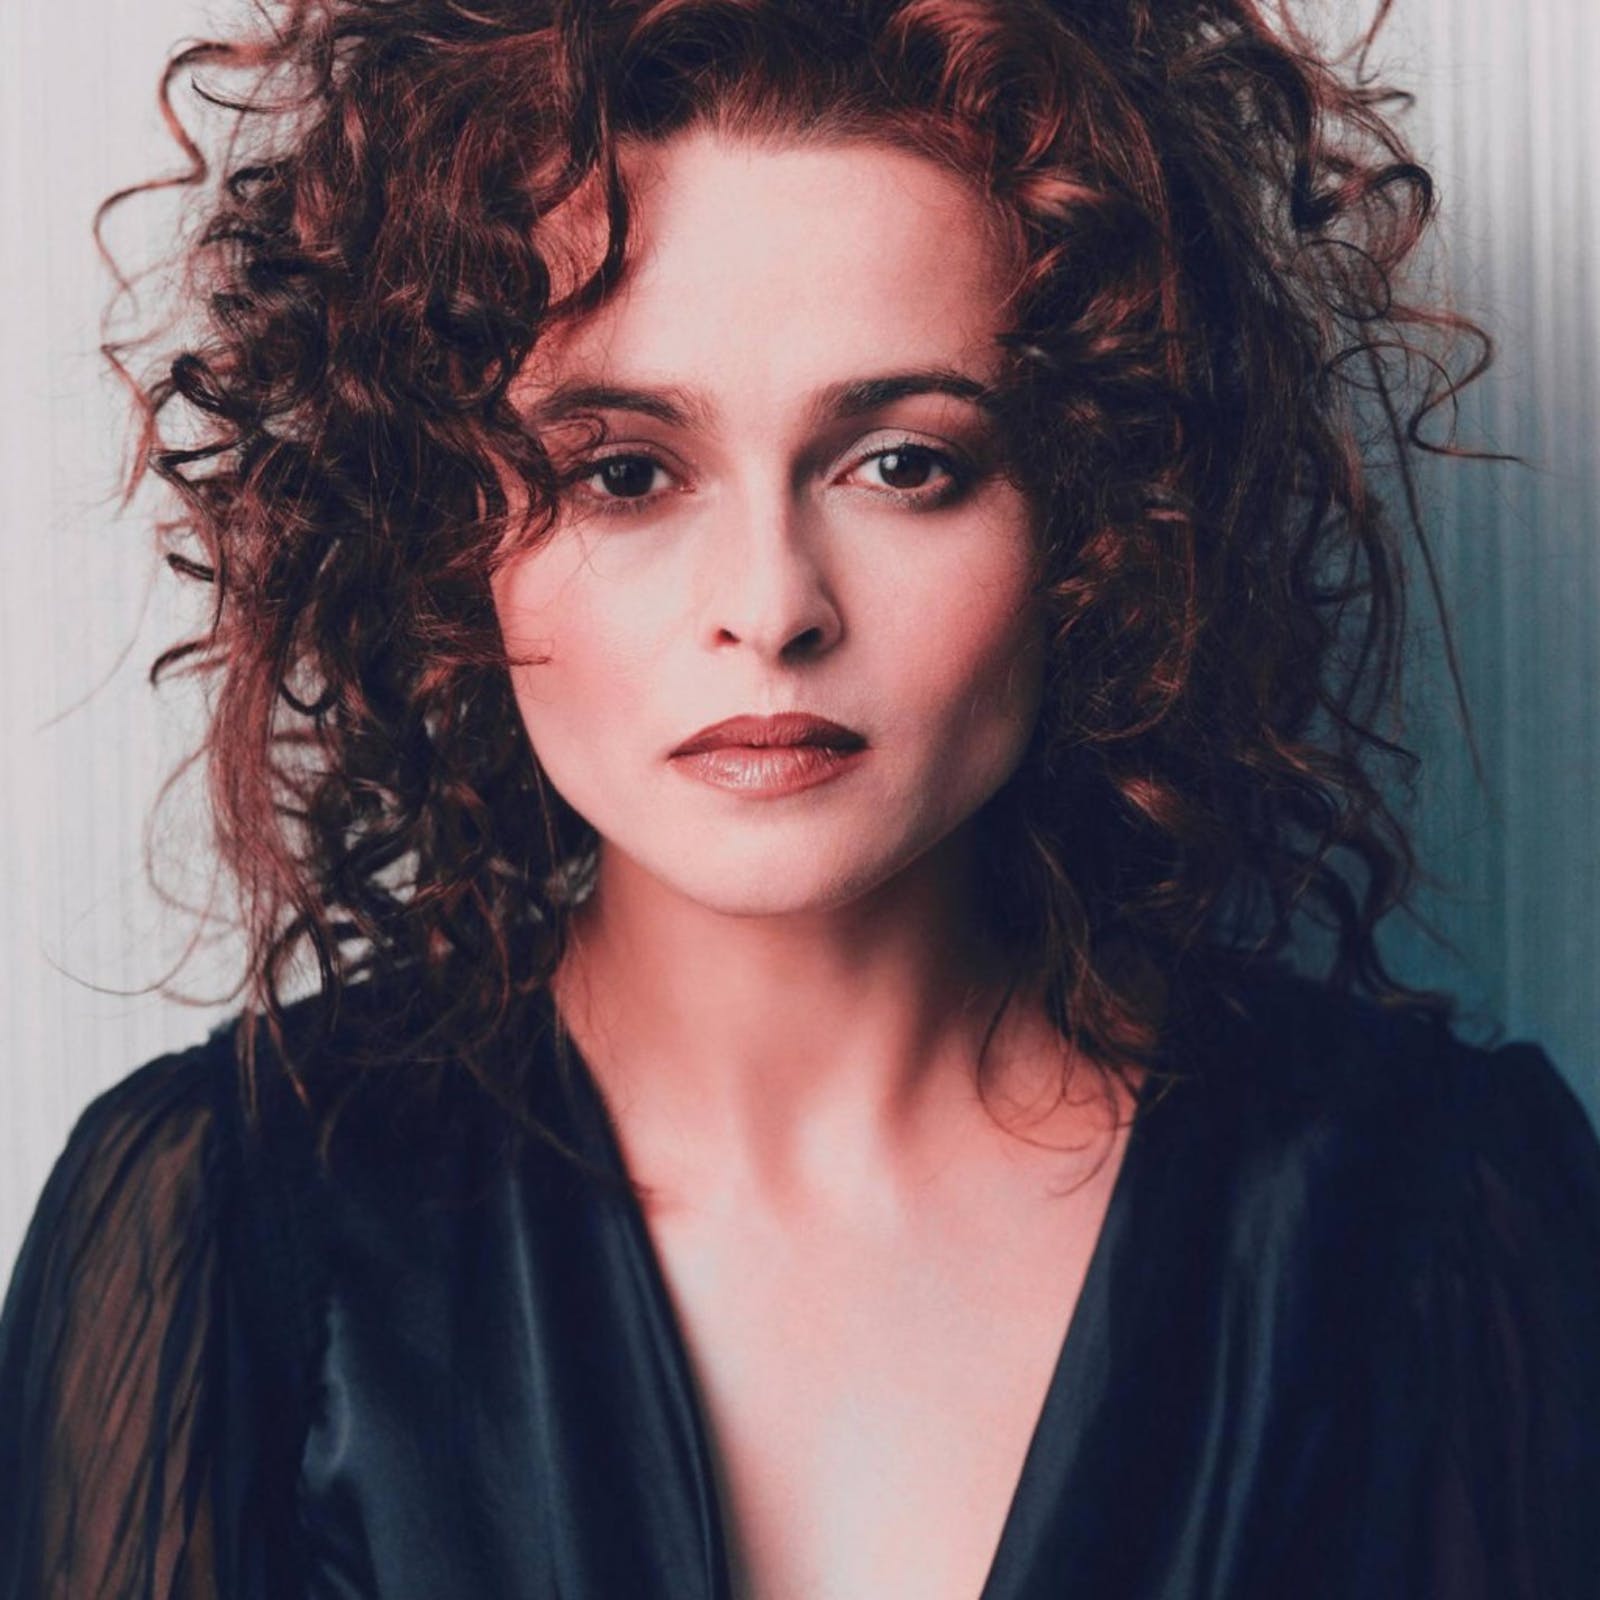 Nghệ sĩ Helena Bonham Carter